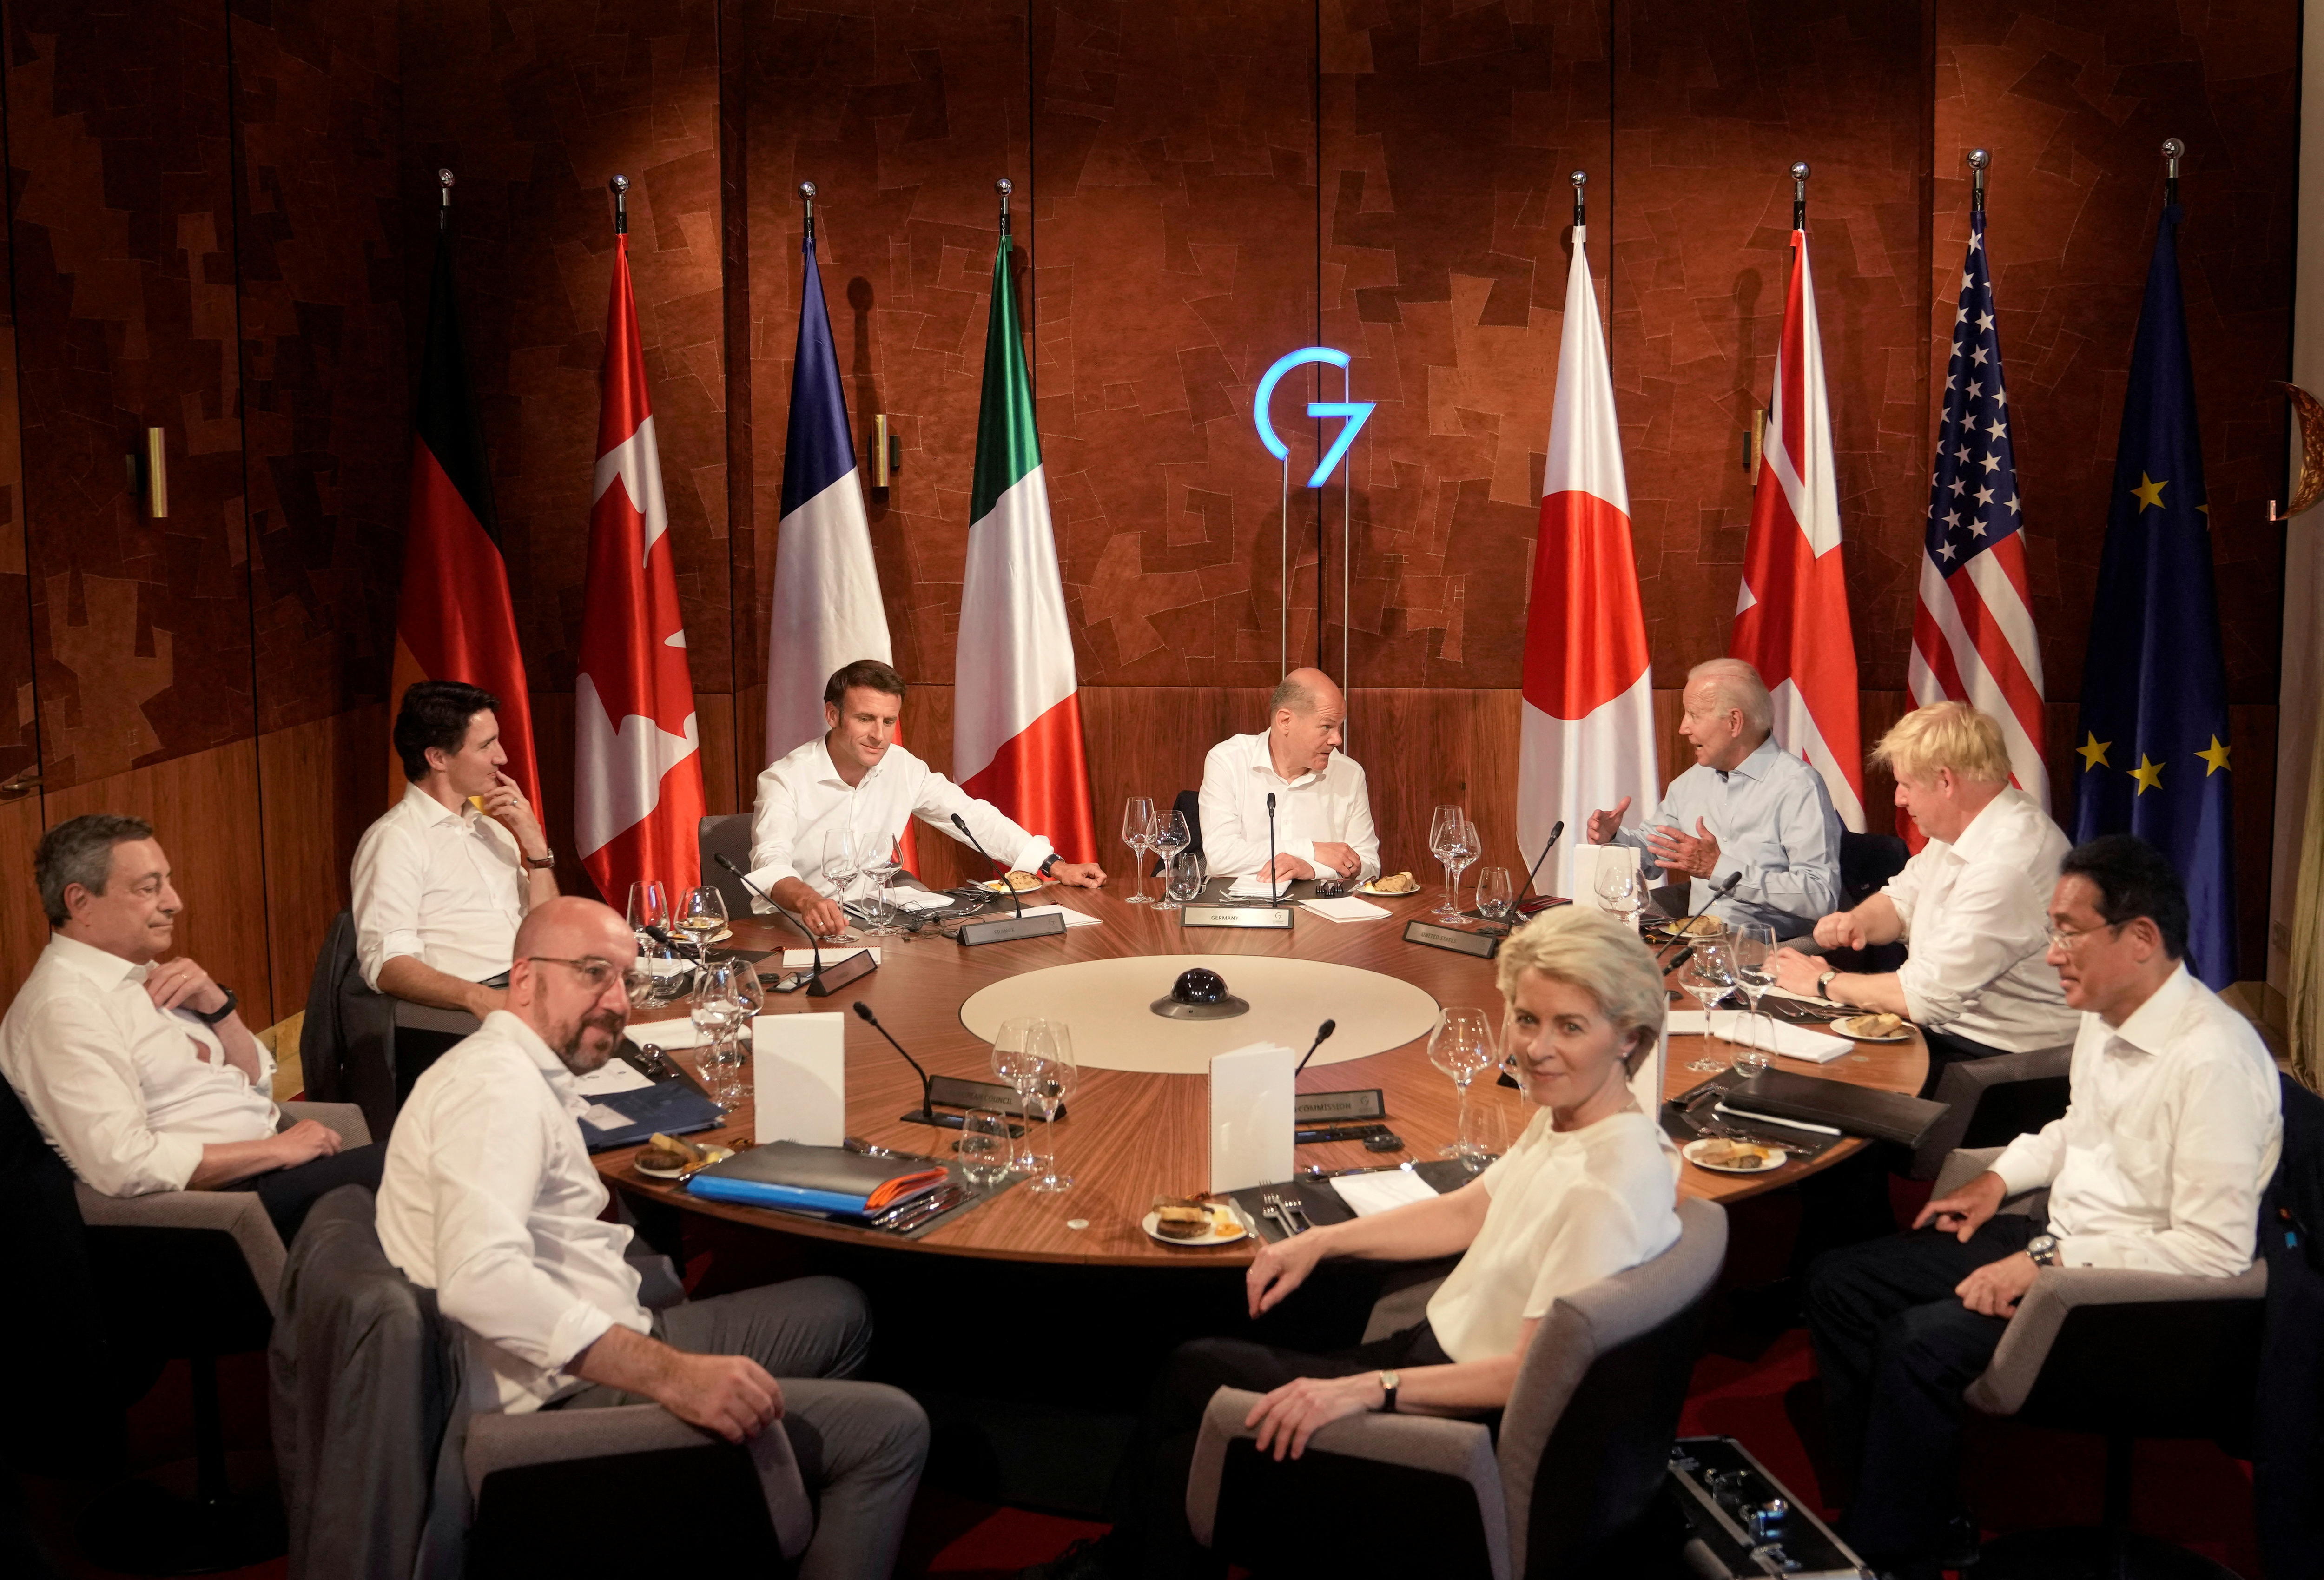 Ursula von der Leyen sits around a table with other world leaders, including Joe Biden and Emmanuel Macron.